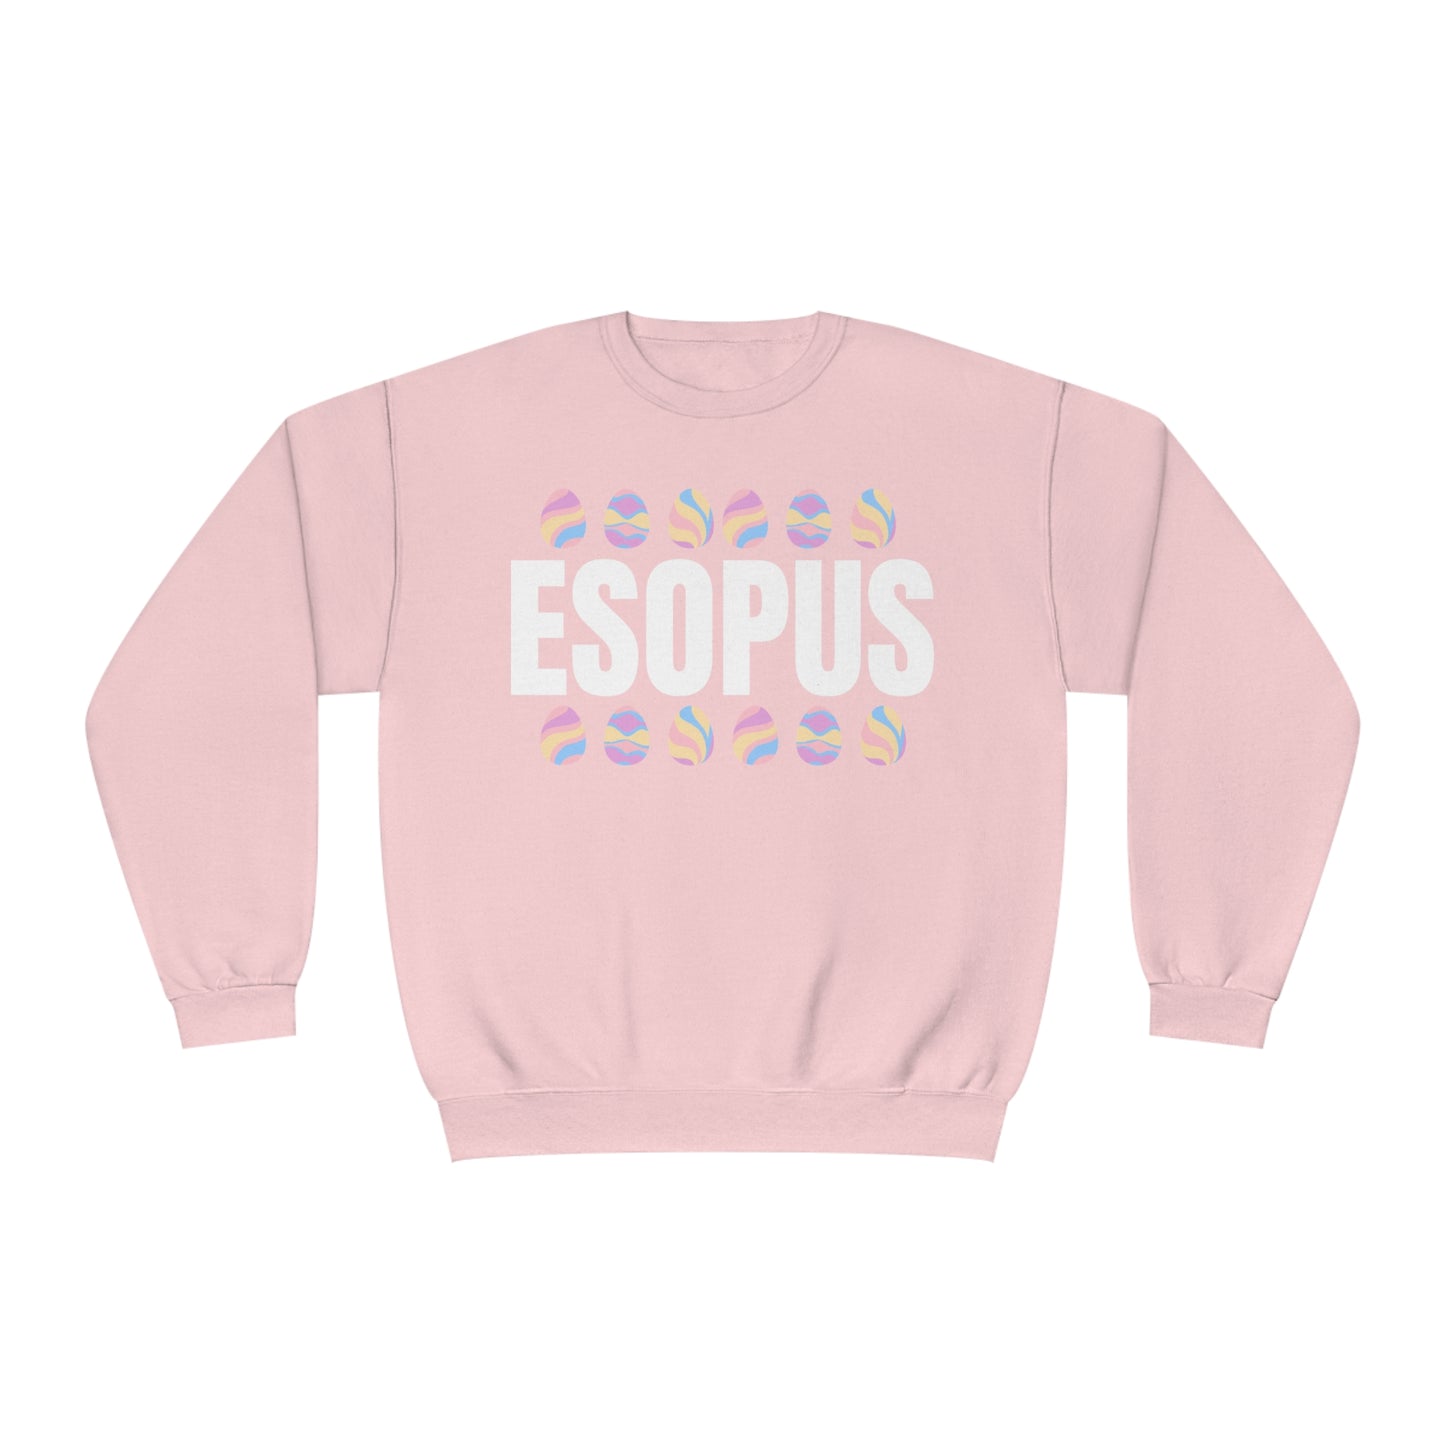 Unisex ESOPUS Easter Crewneck Sweatshirt